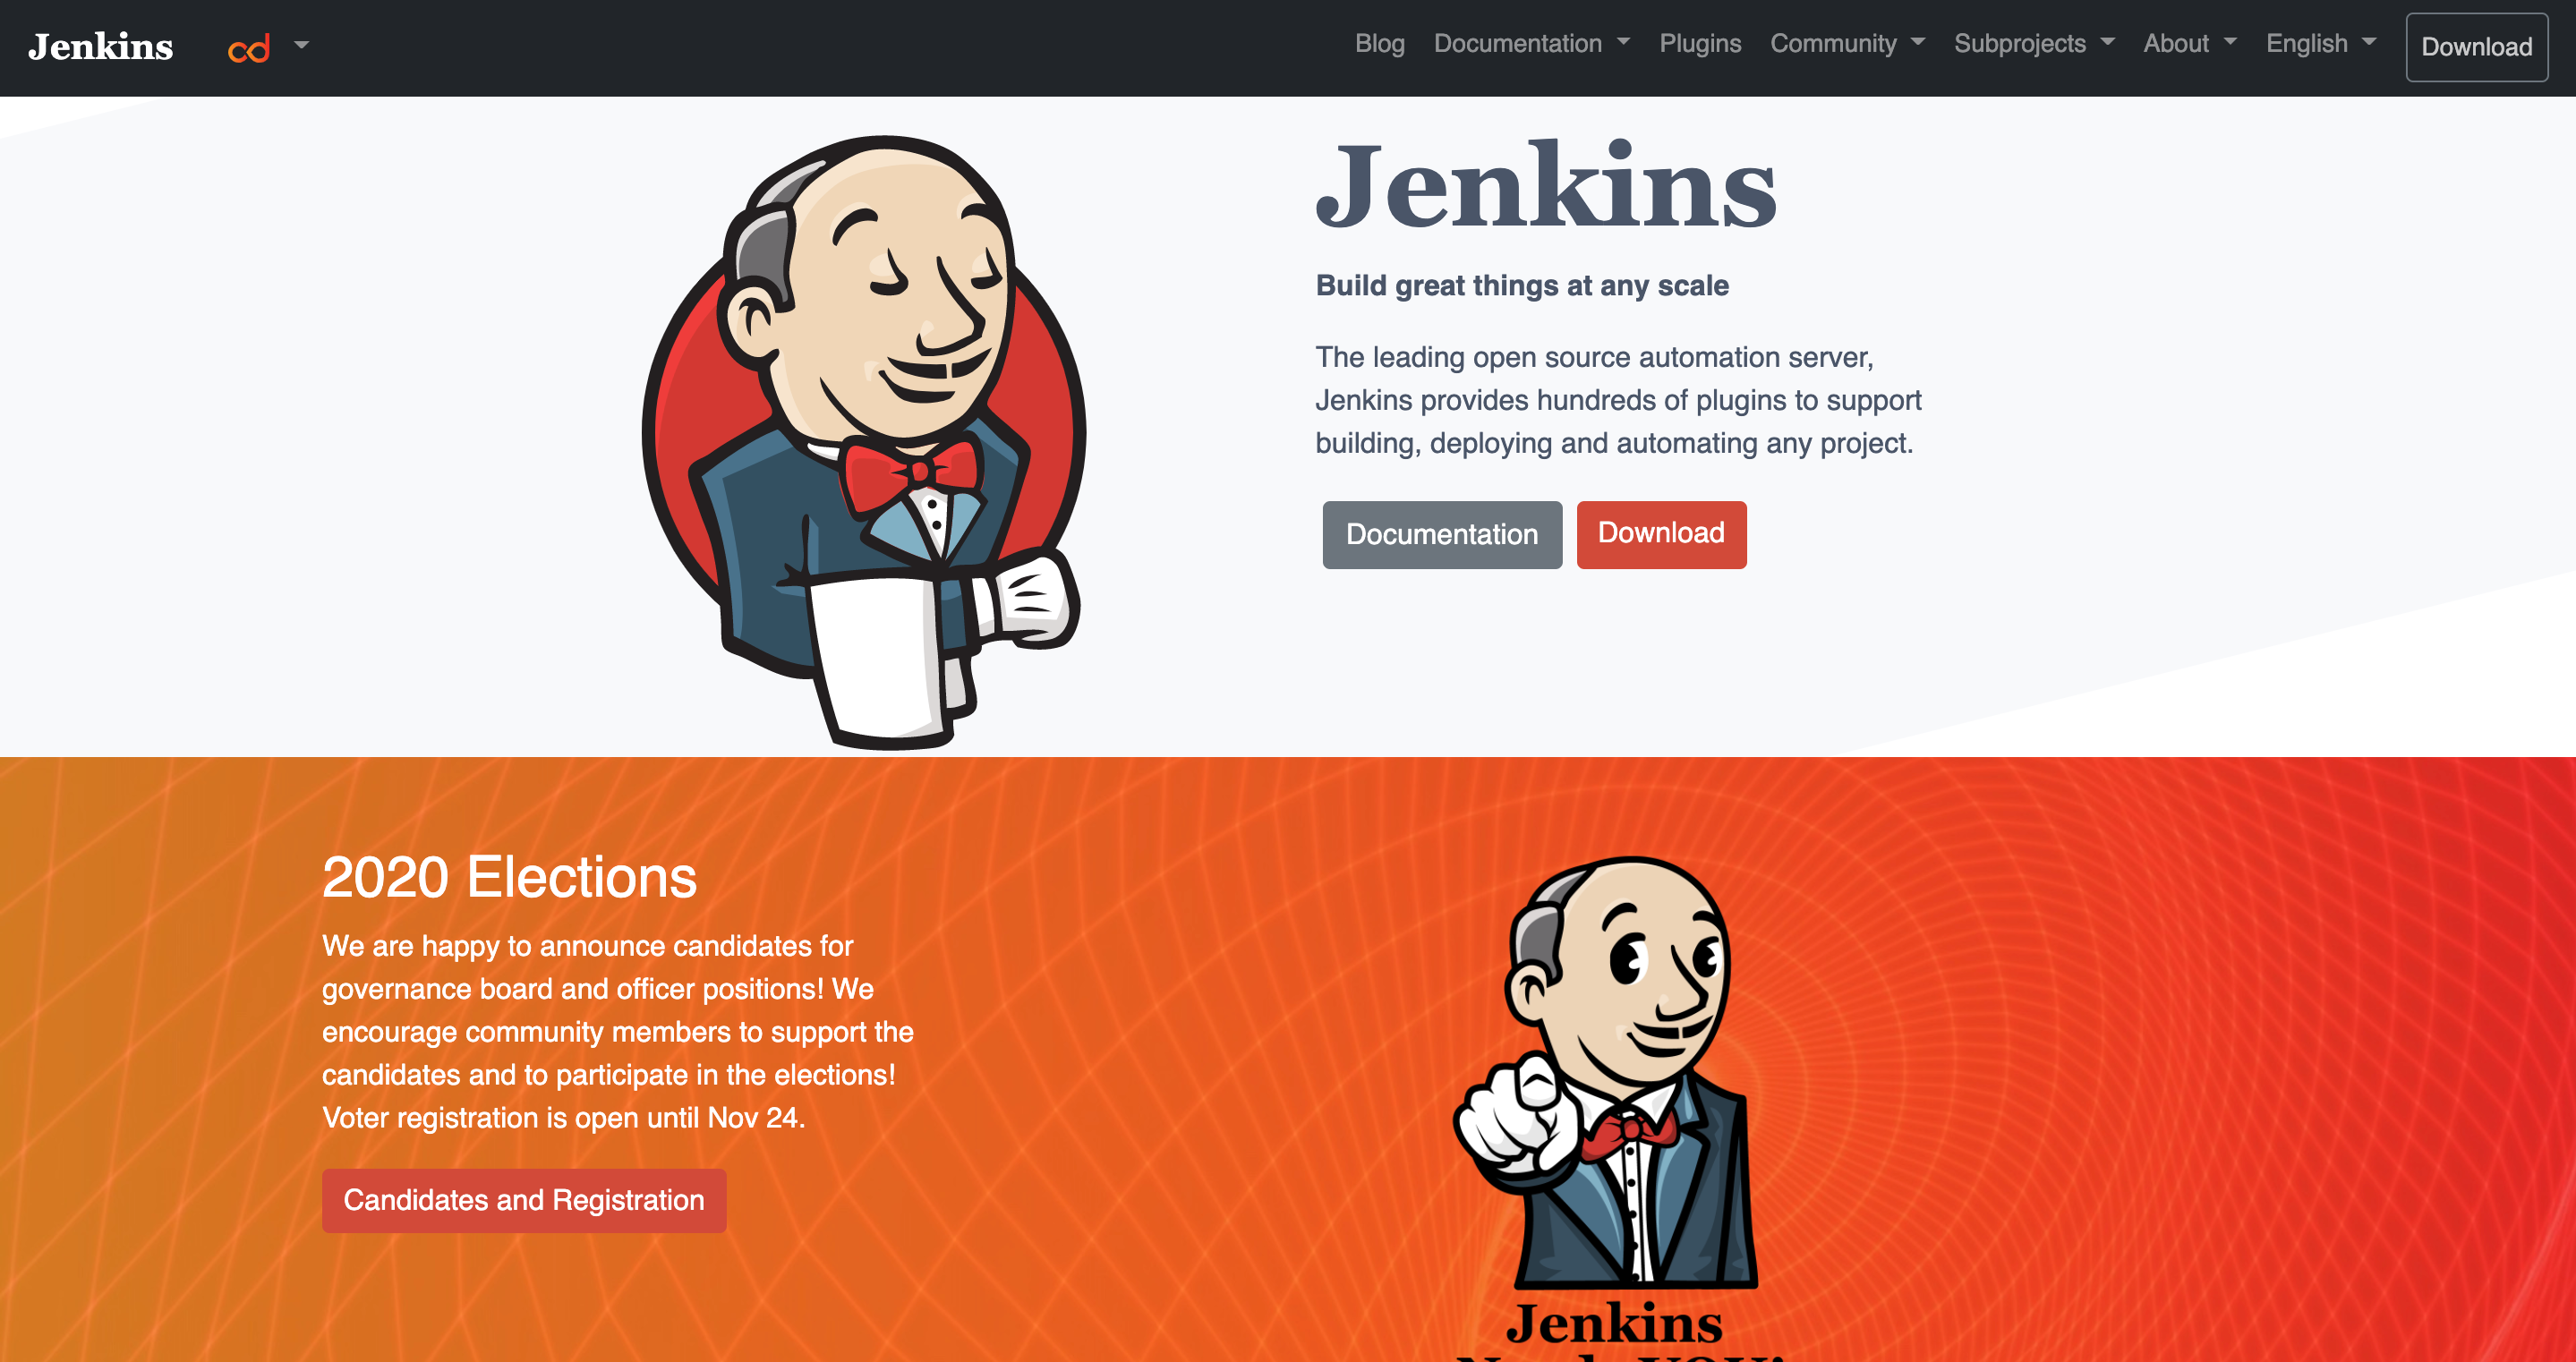 DevOps Tools #2 - Jenkins